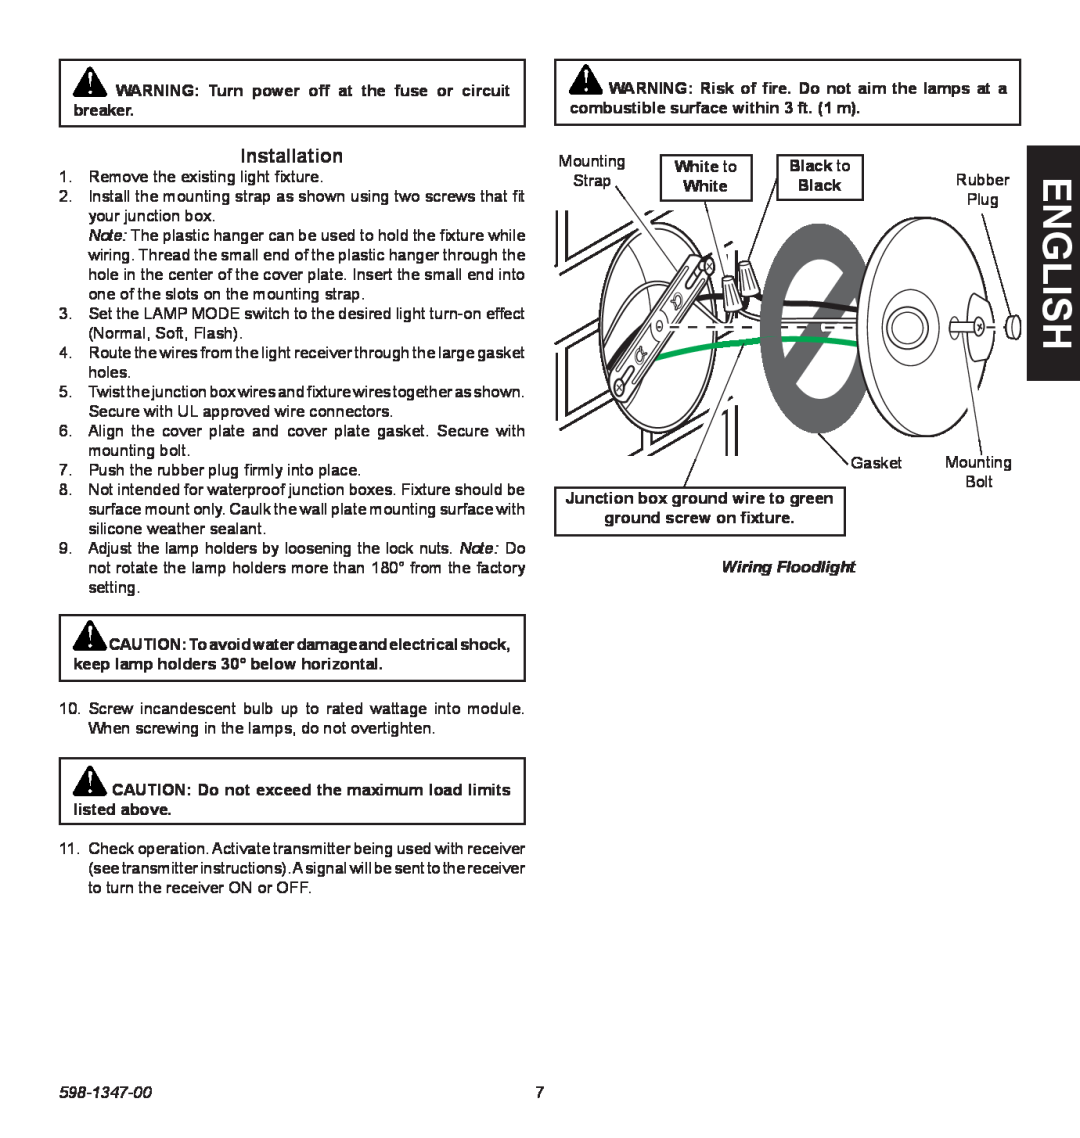 Heath Zenith 598-1347-00 operating instructions English, Installation, Wiring Floodlight 